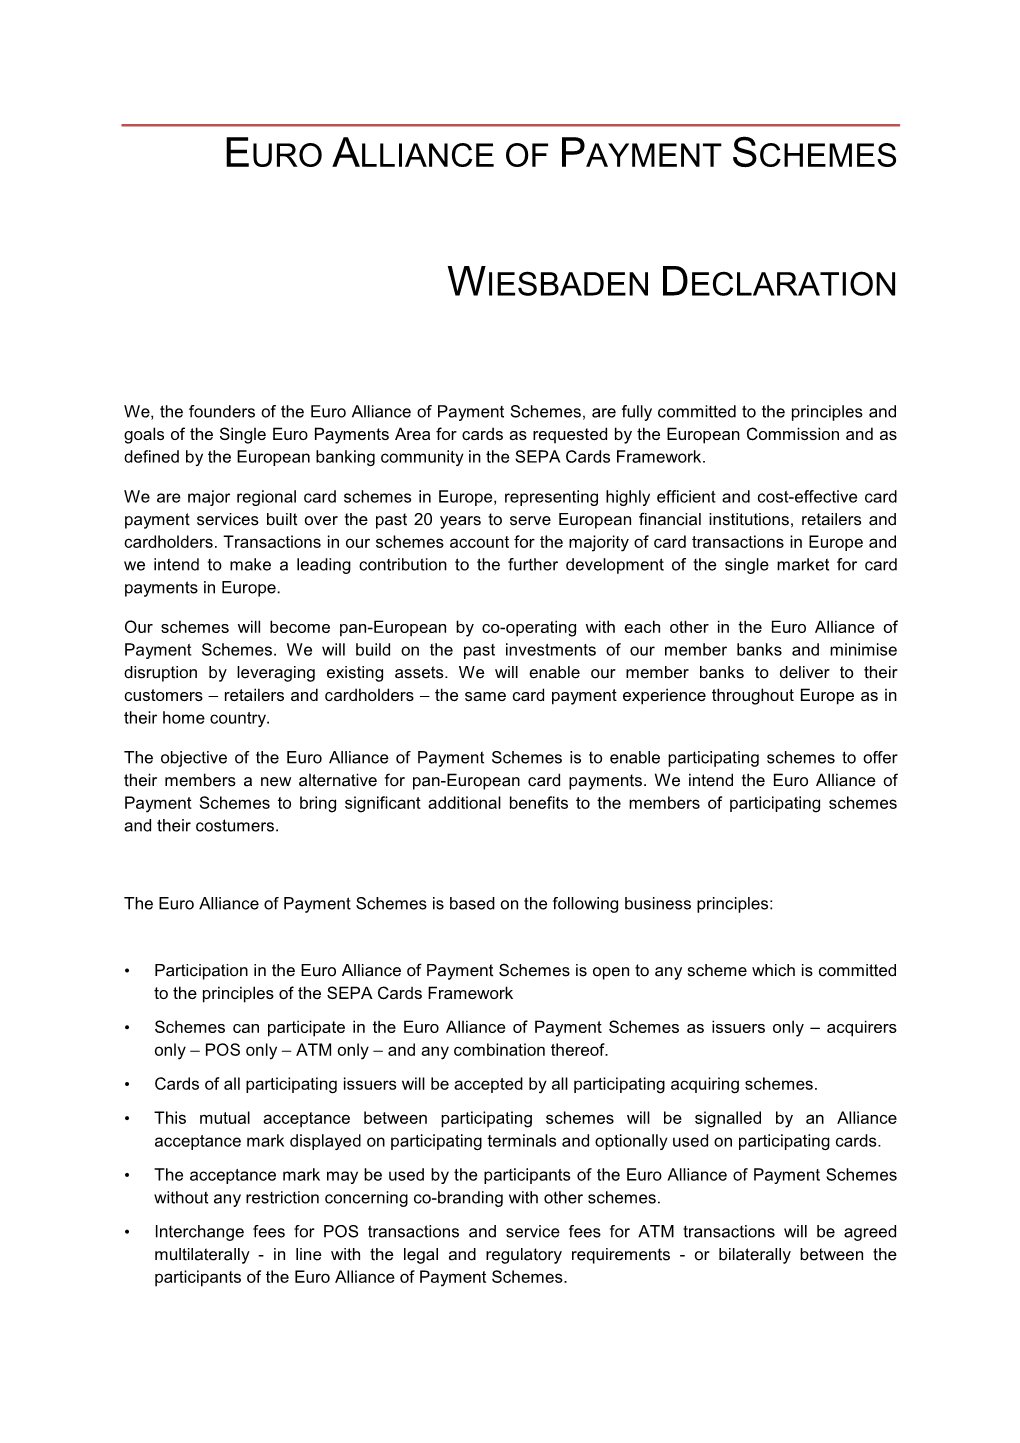 Euro Alliance of Payment Schemes Wiesbaden